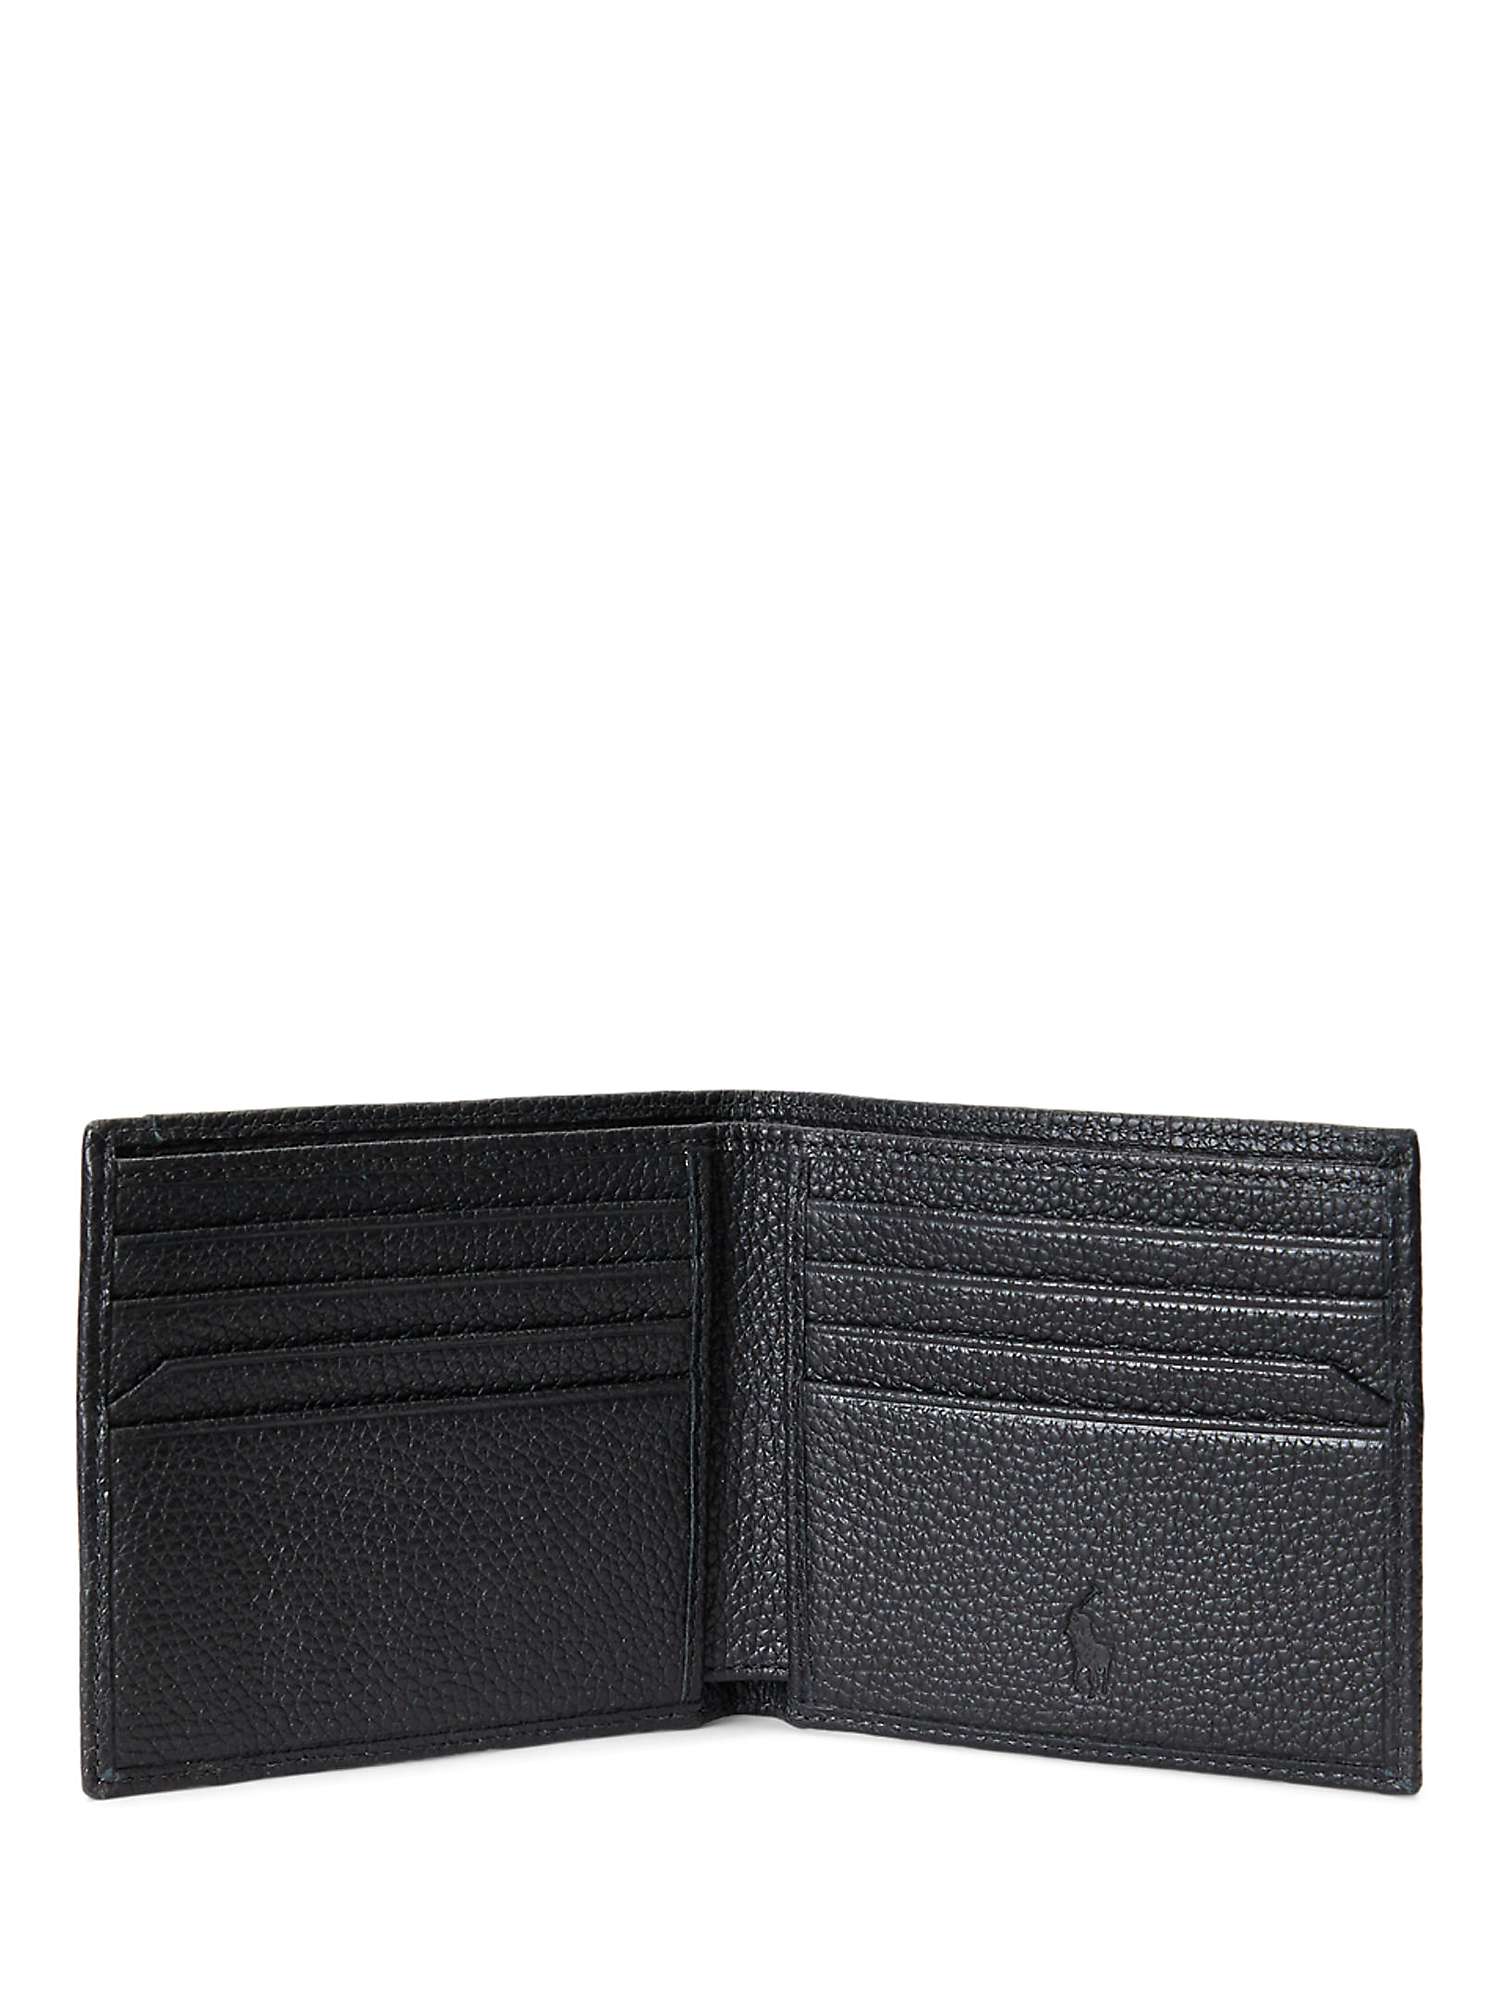 Buy Polo Ralph Lauren Pebbled Leather Wallet, Black Online at johnlewis.com